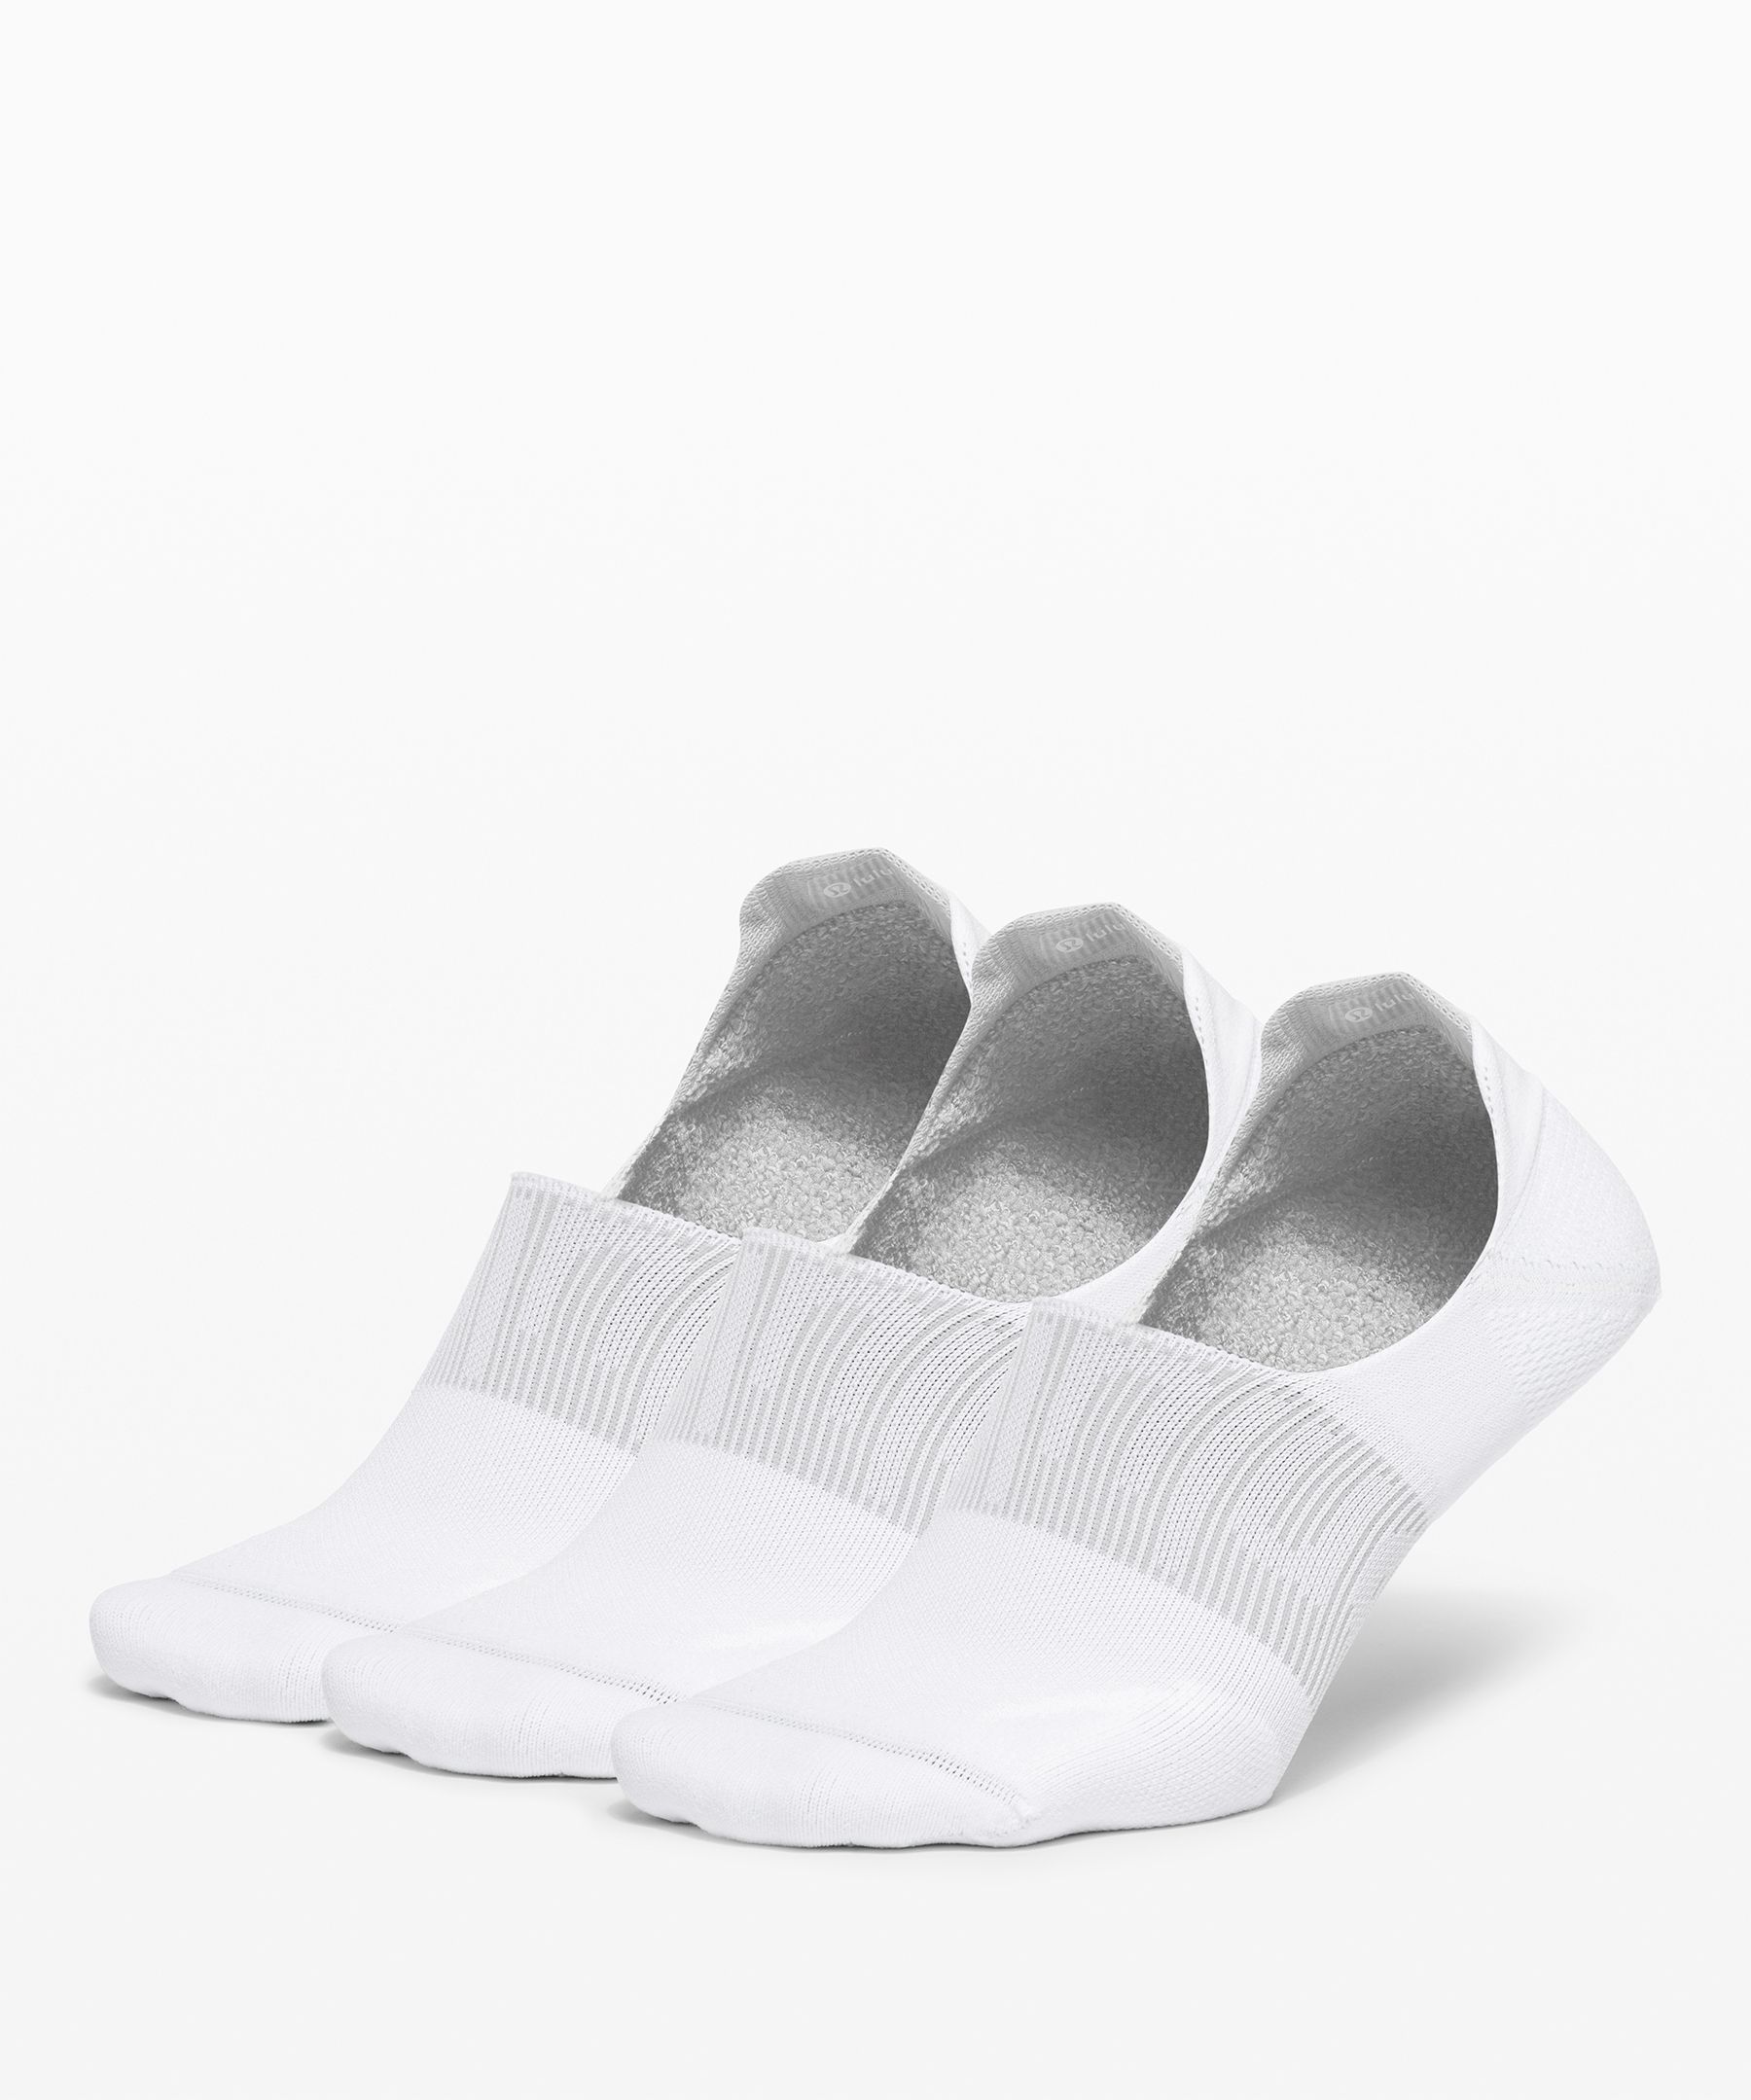 Premium Multi-Purpose Yoga Socks with Grippers - 4 Pairs - Black & Grey